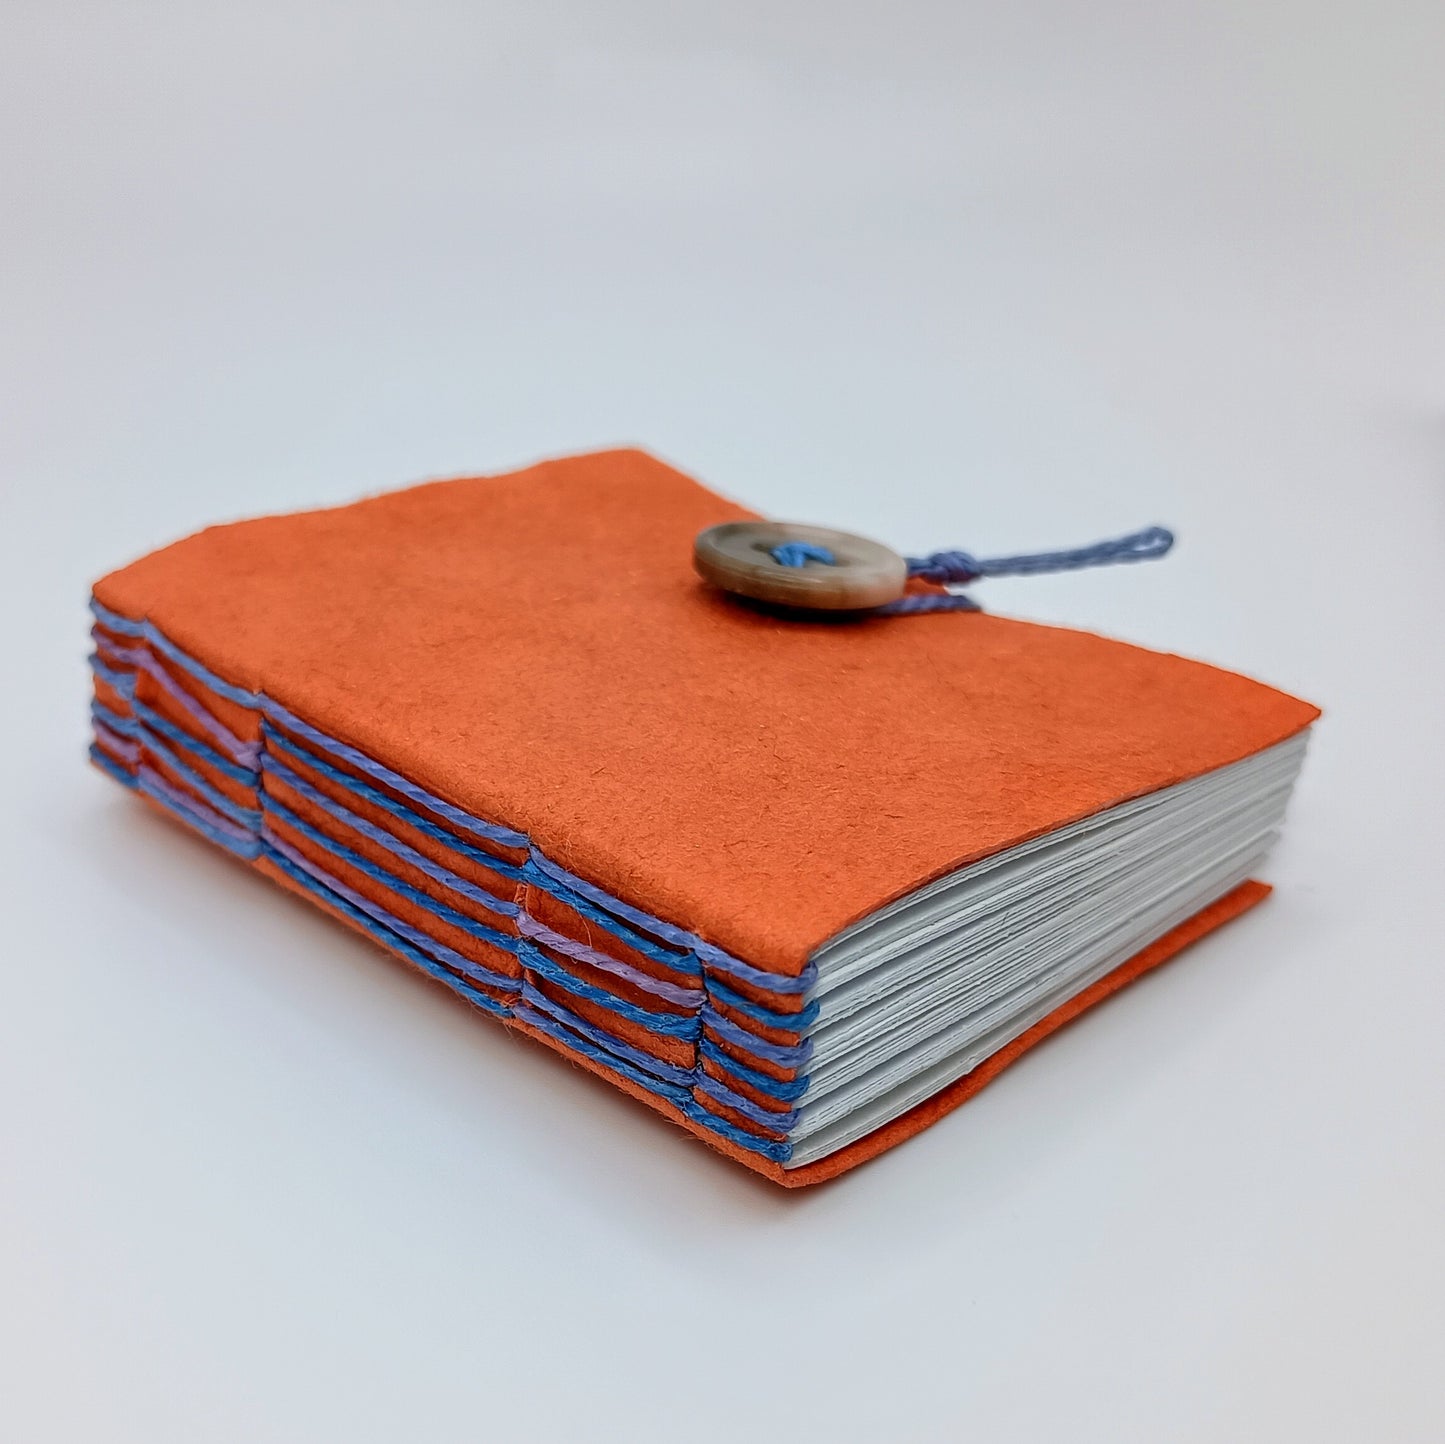 Miniature Colorful Blank Books